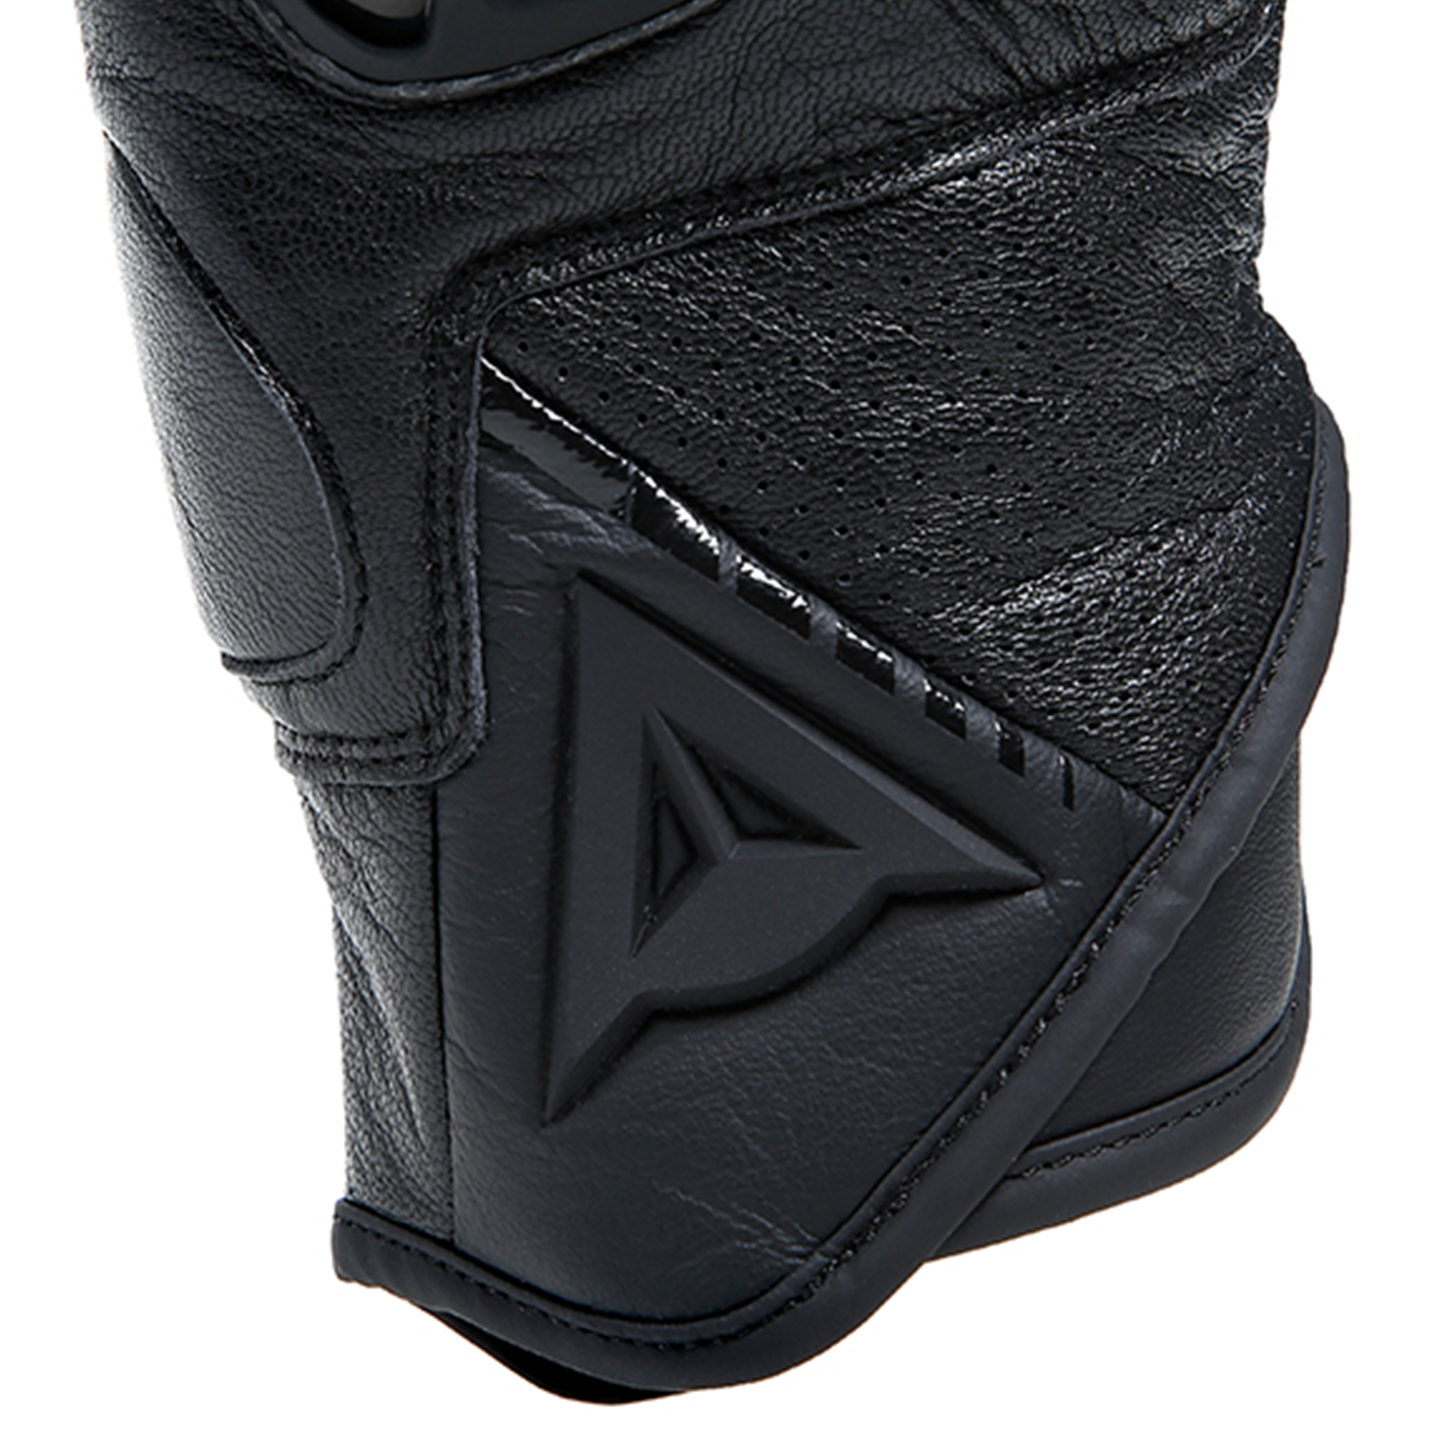 Dainese Blackshape Leather Gloves - Black